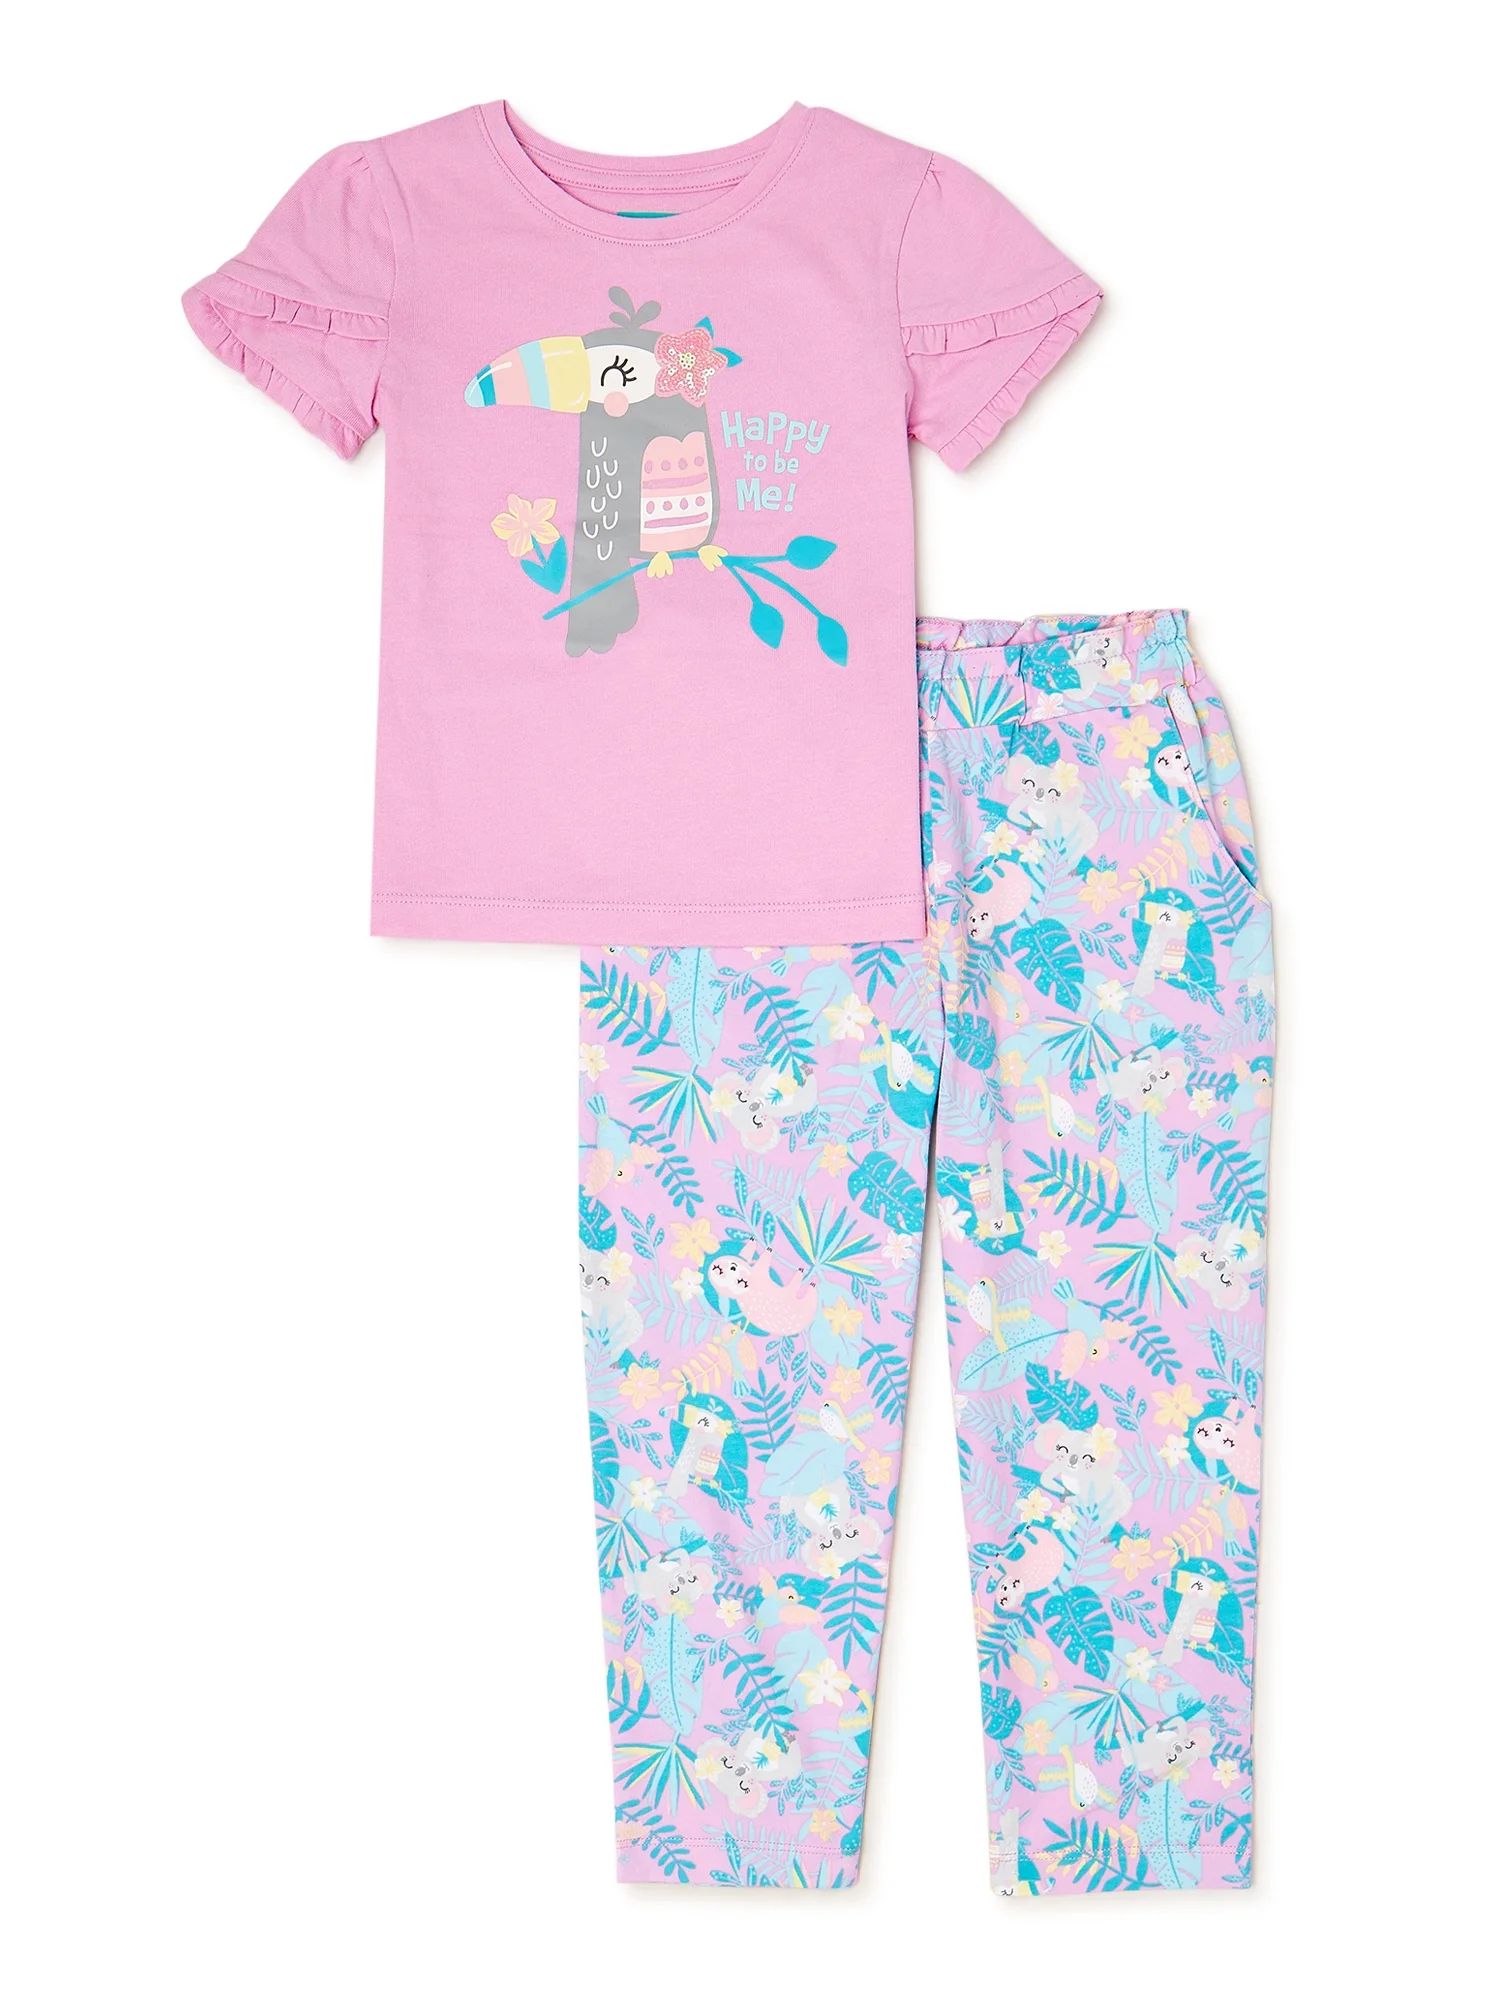 365 Kids From Garanimals Girls Ruffle Sleeve T-Shirt and Pants, 2-Piece Outfit Set, Sizes 4-10 | Walmart (US)